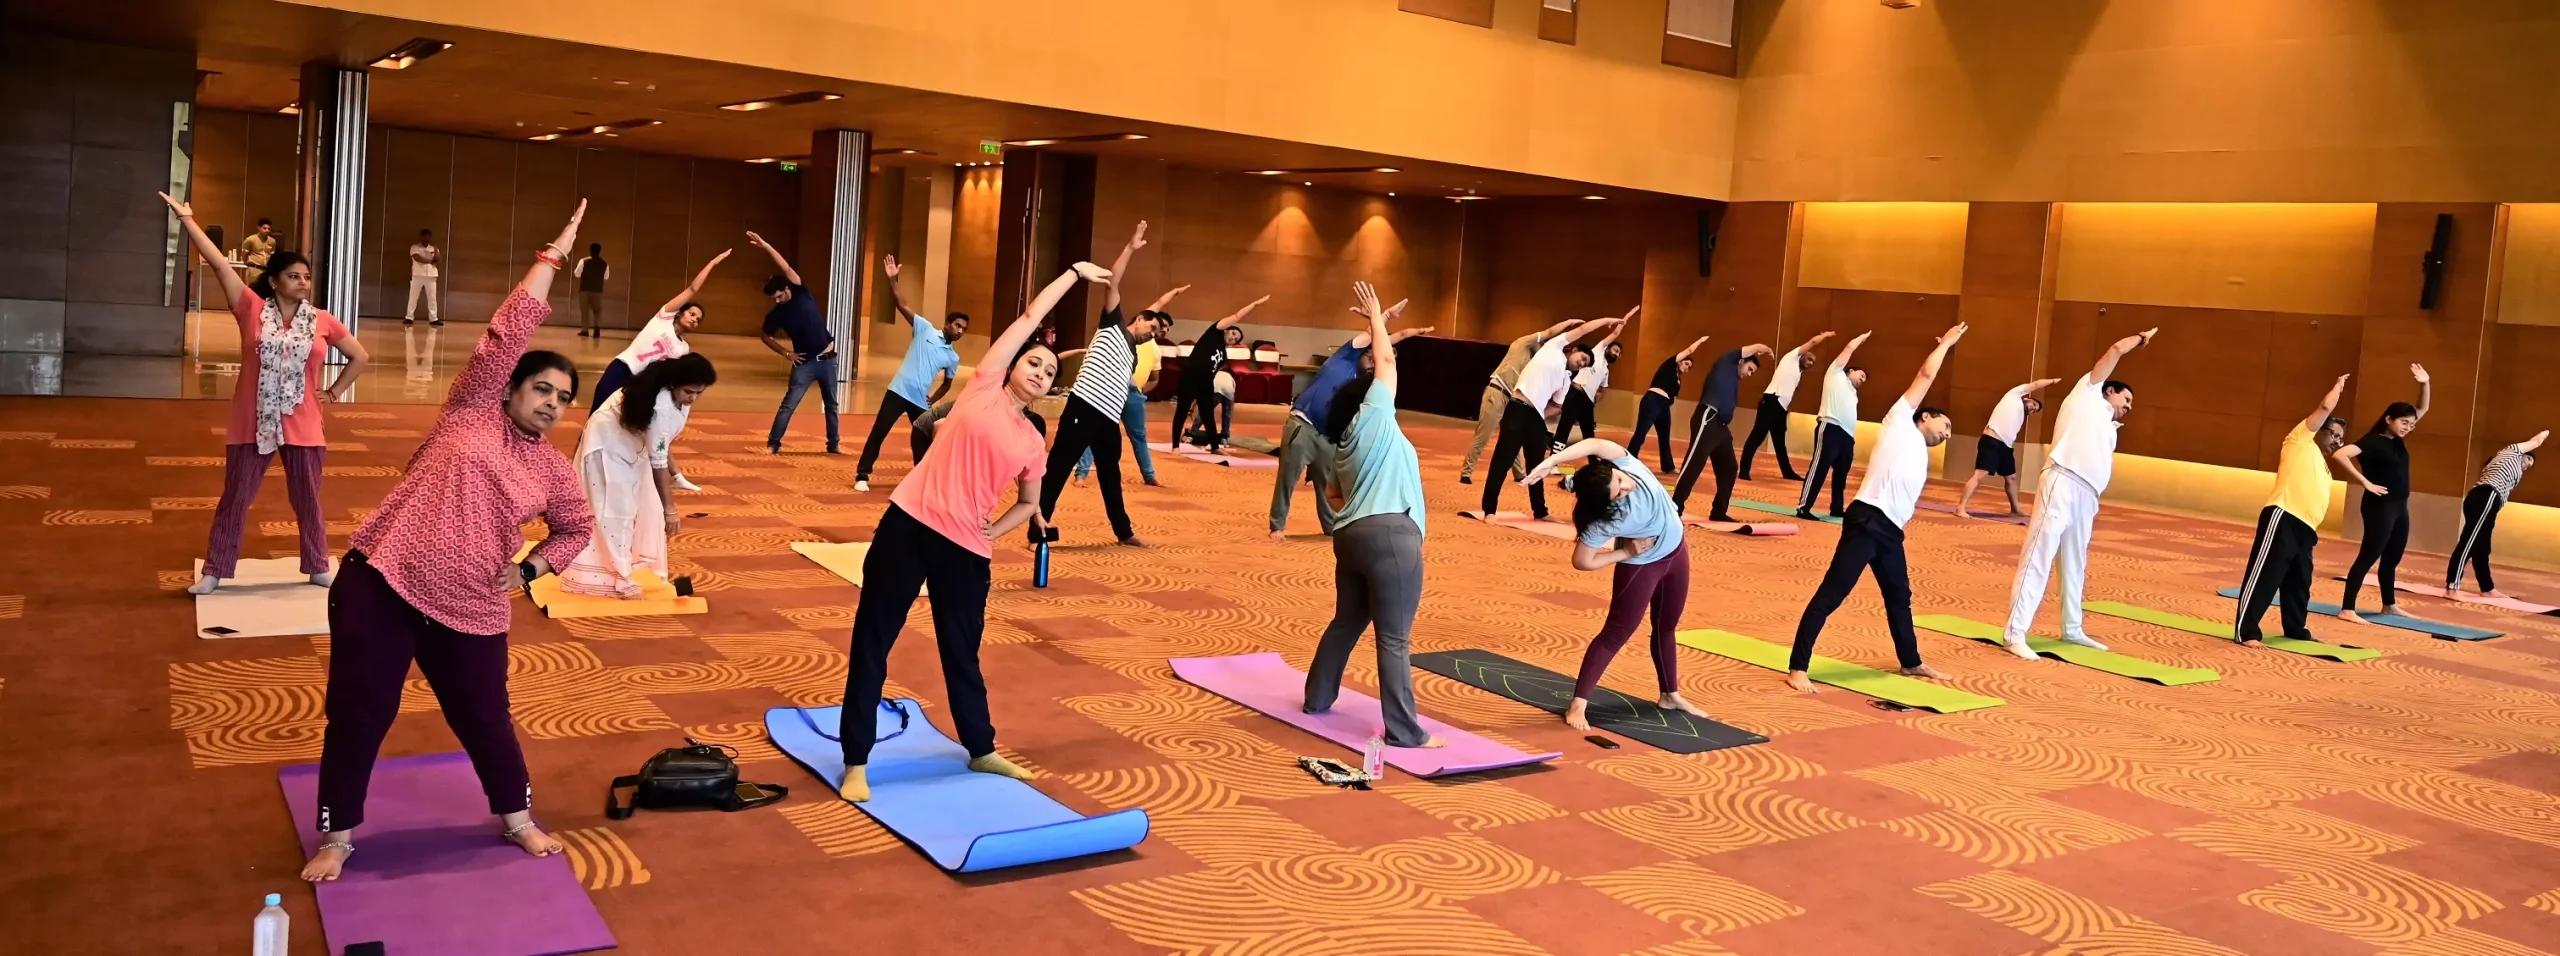 Yoga Training Sessions img 15